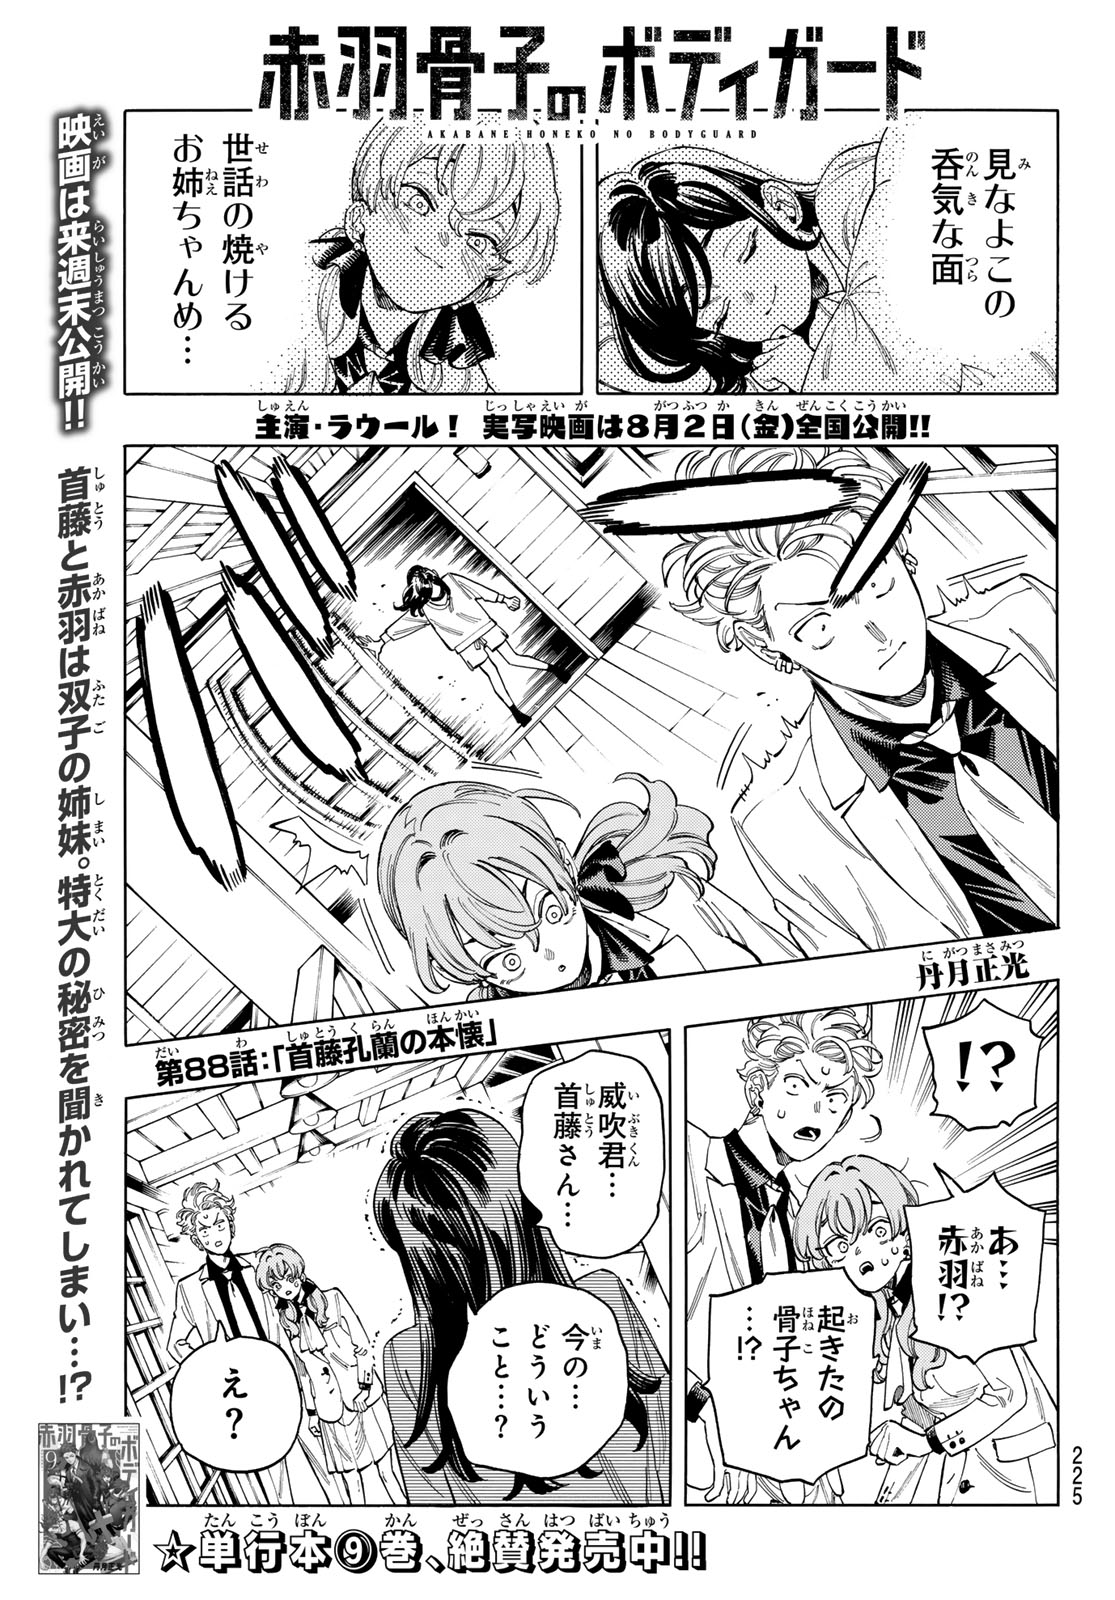 Akabane Honeko no Bodyguard - Chapter 88 - Page 1